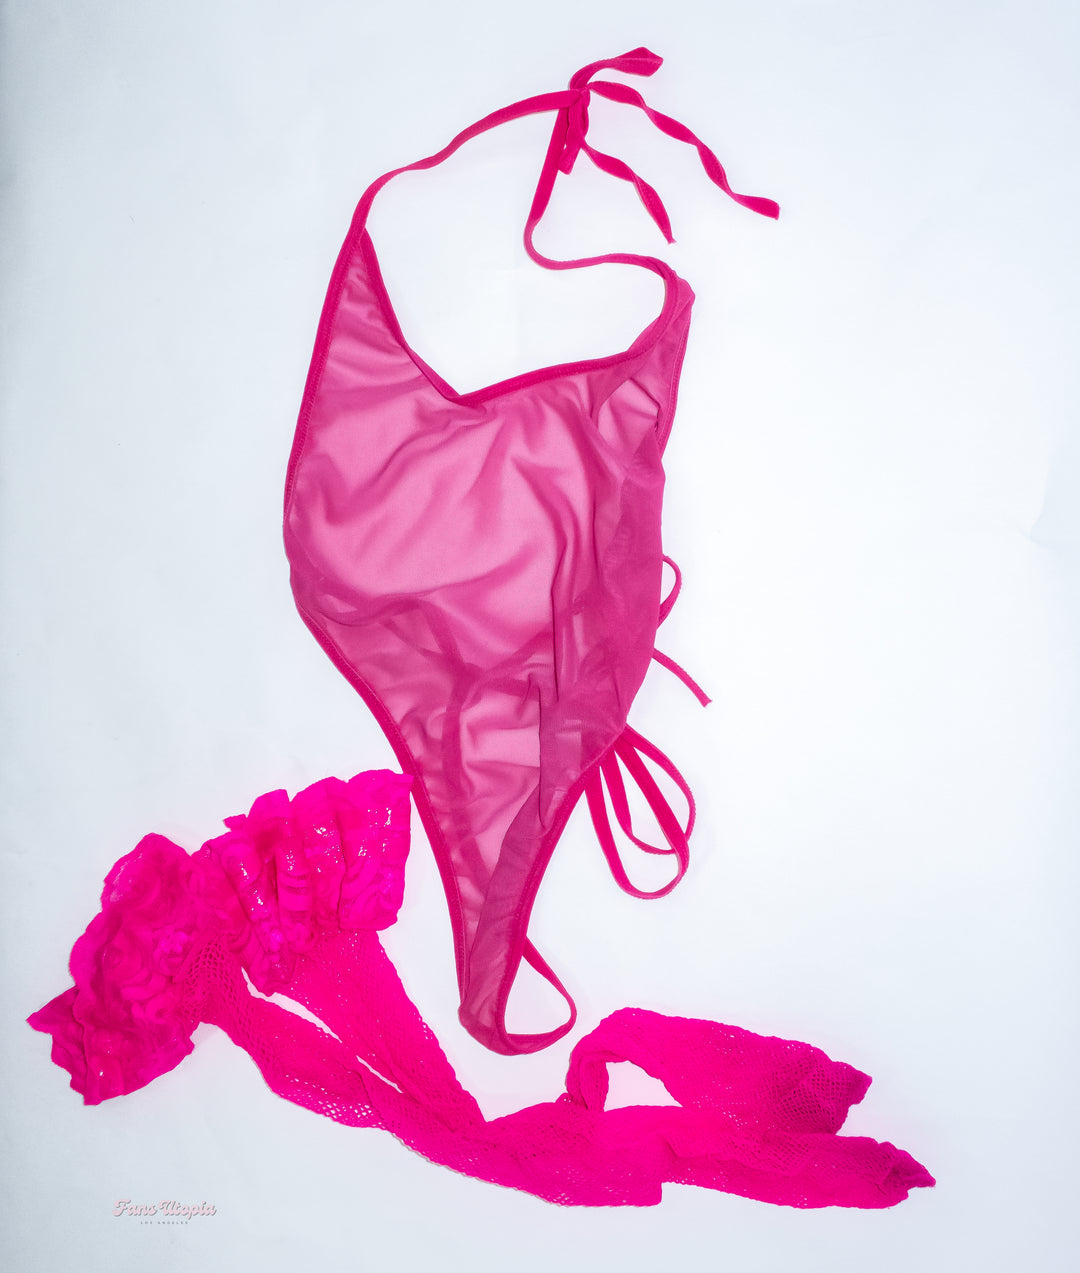 Queenie Sateen Pink Mesh Bodysuit and Fishnet Stockngs